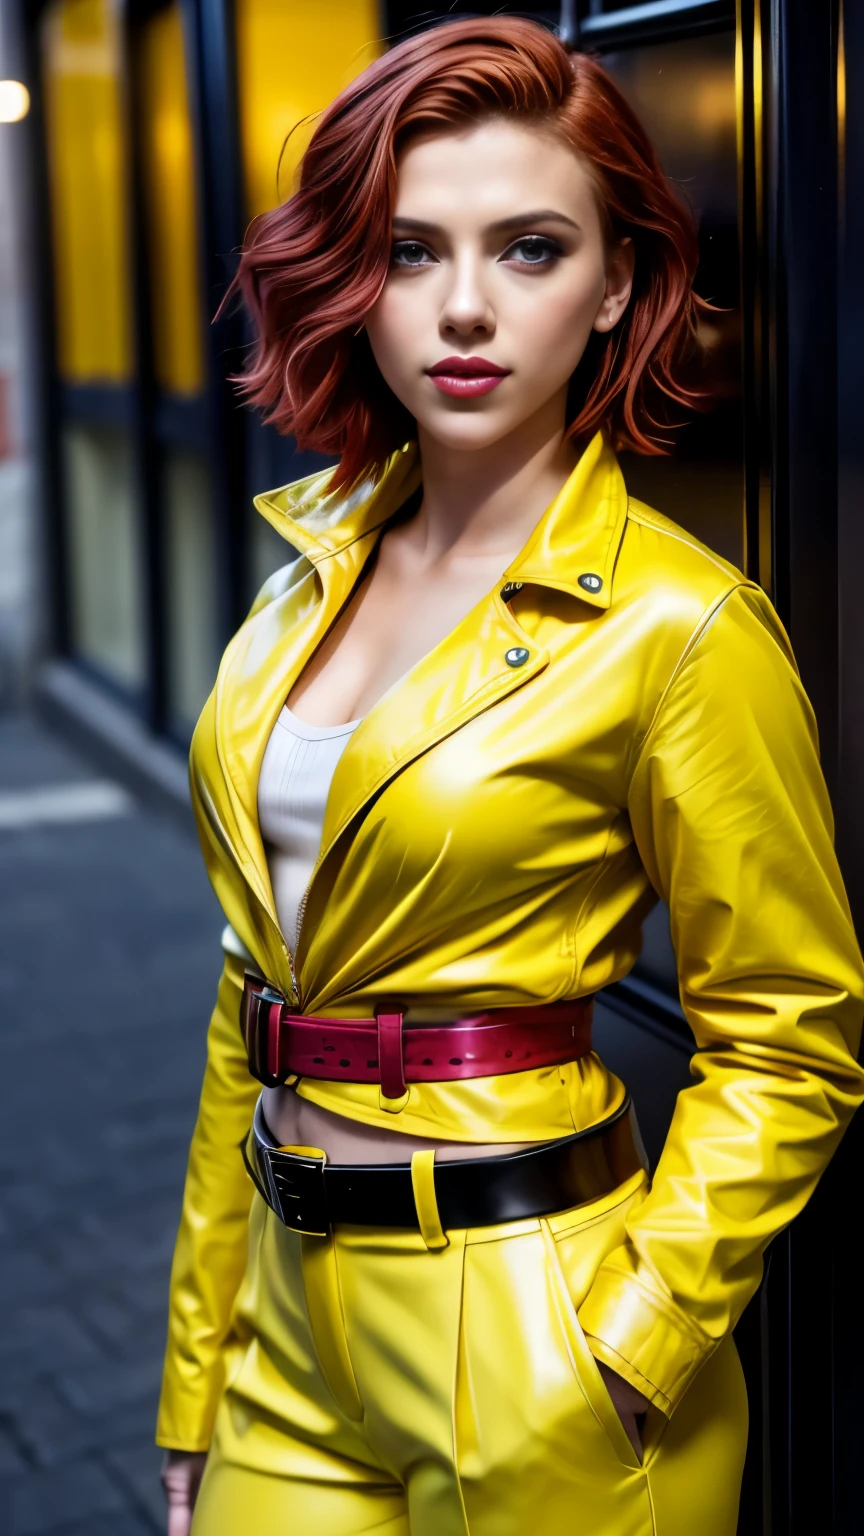 Scarlett Johansson, smiling, ((Very intense makeup)), ((bright lipstick)), short hair, red hair, yellow jacket, yellow belt, yellow pants, April